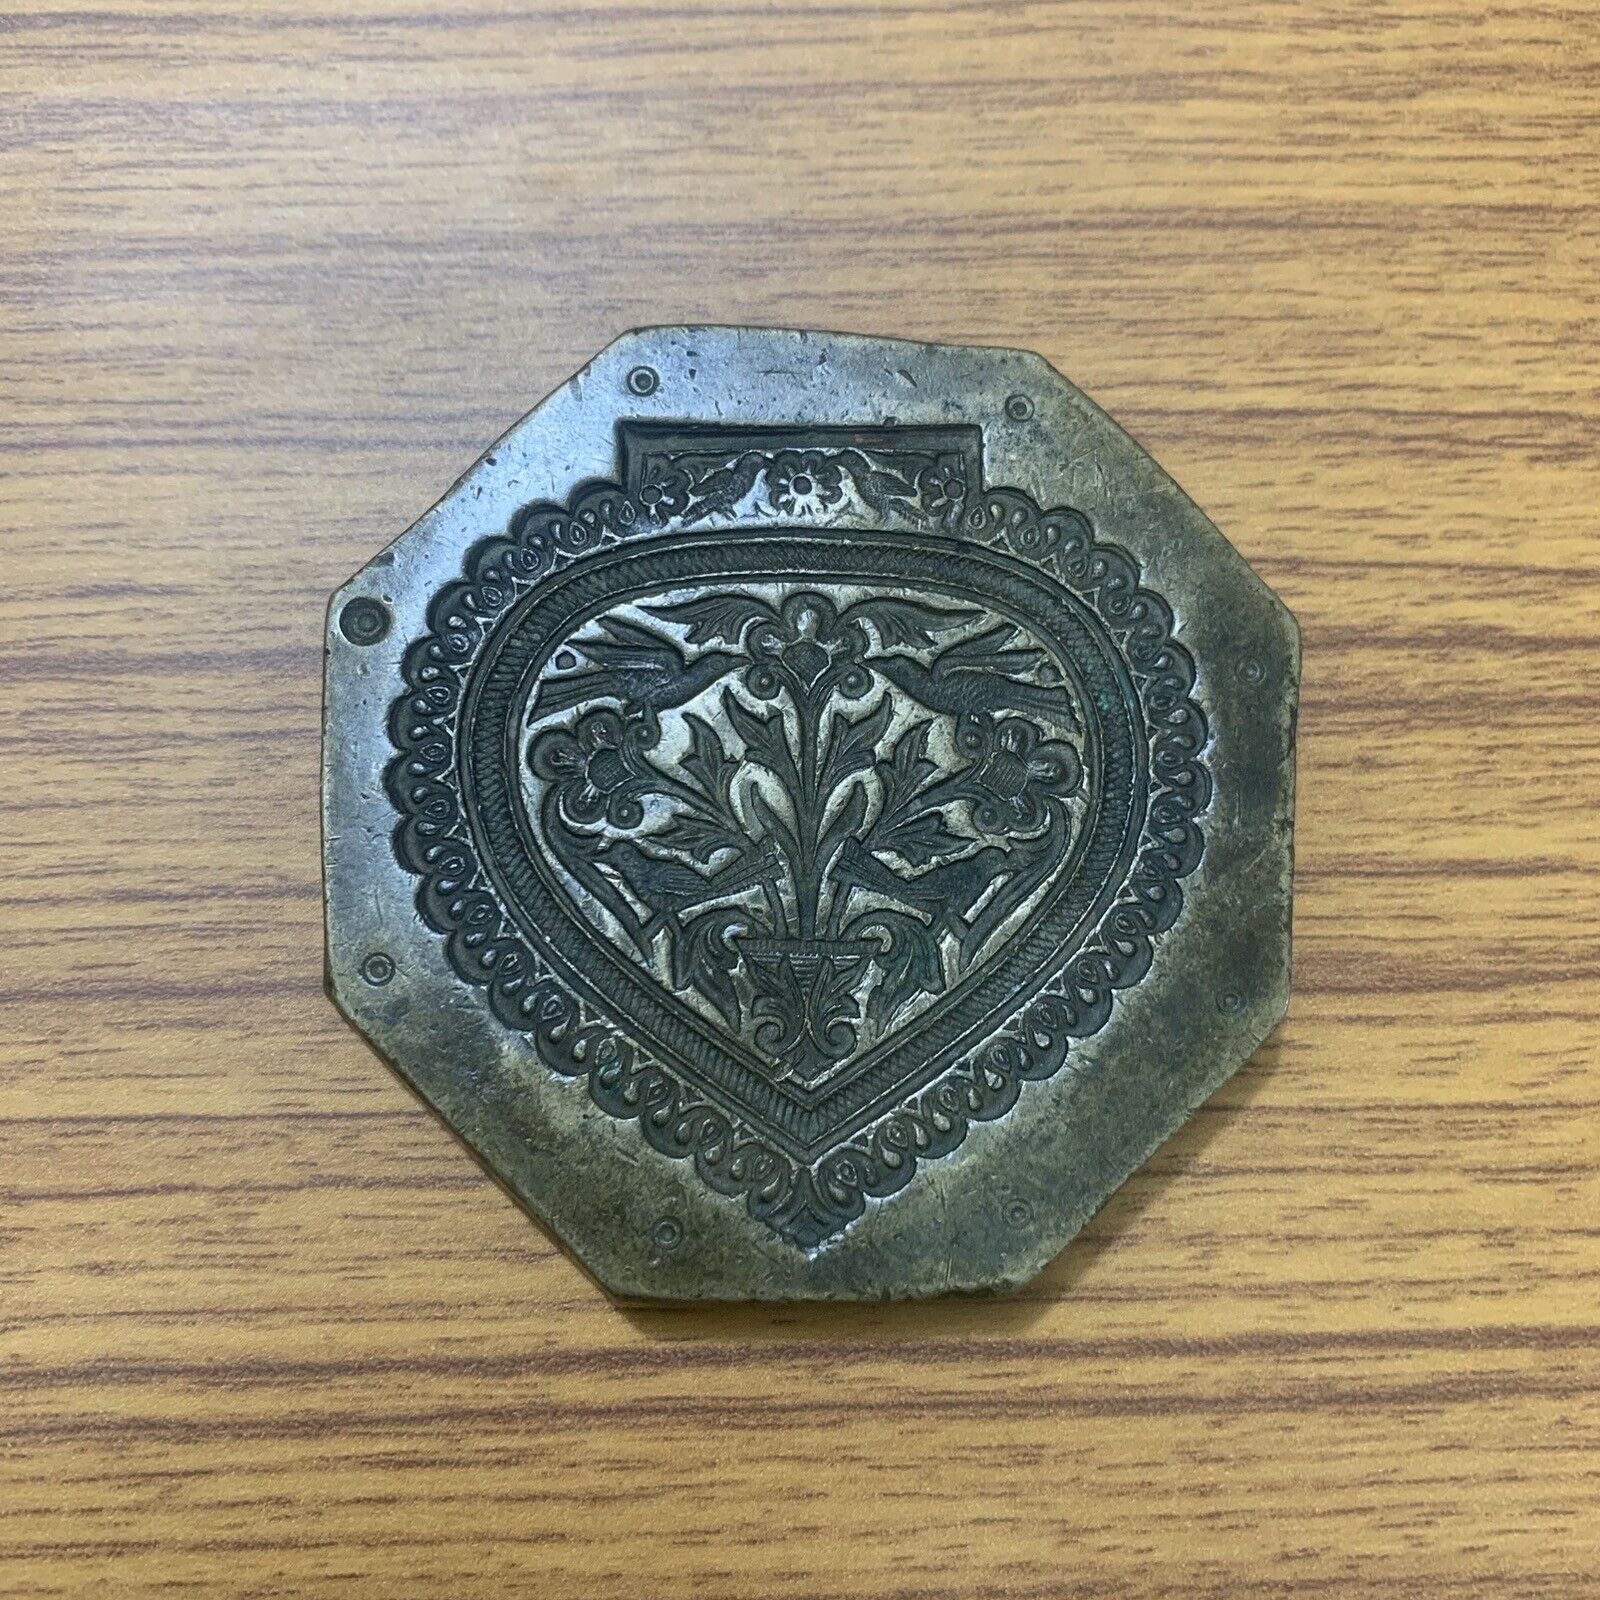 bell metal jewelry stamp die seal birds & flowers design Rarest, Old antique 